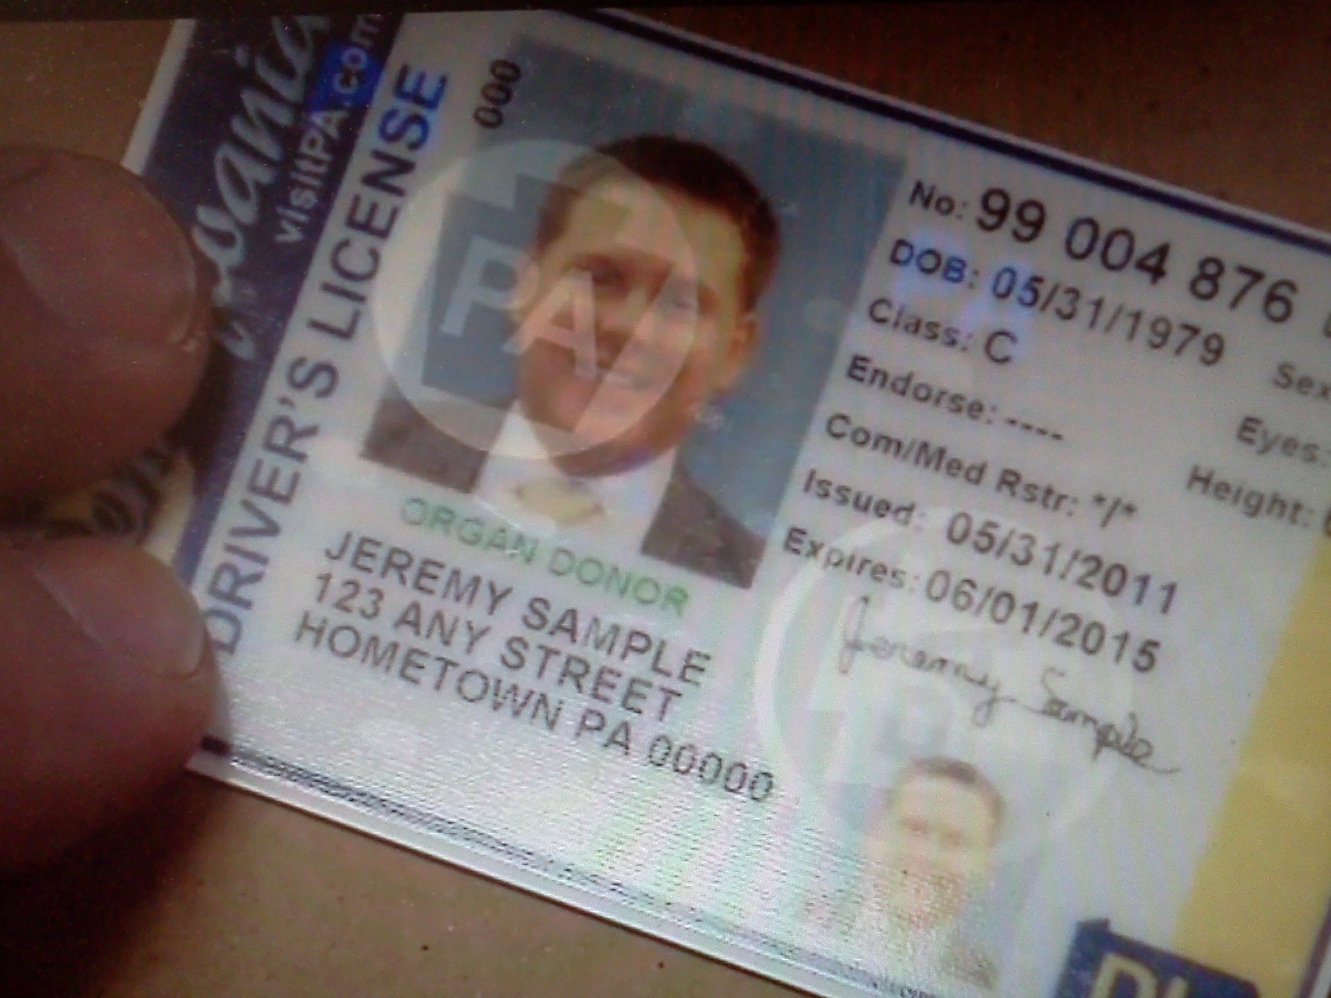 Drivers License, PennDOT